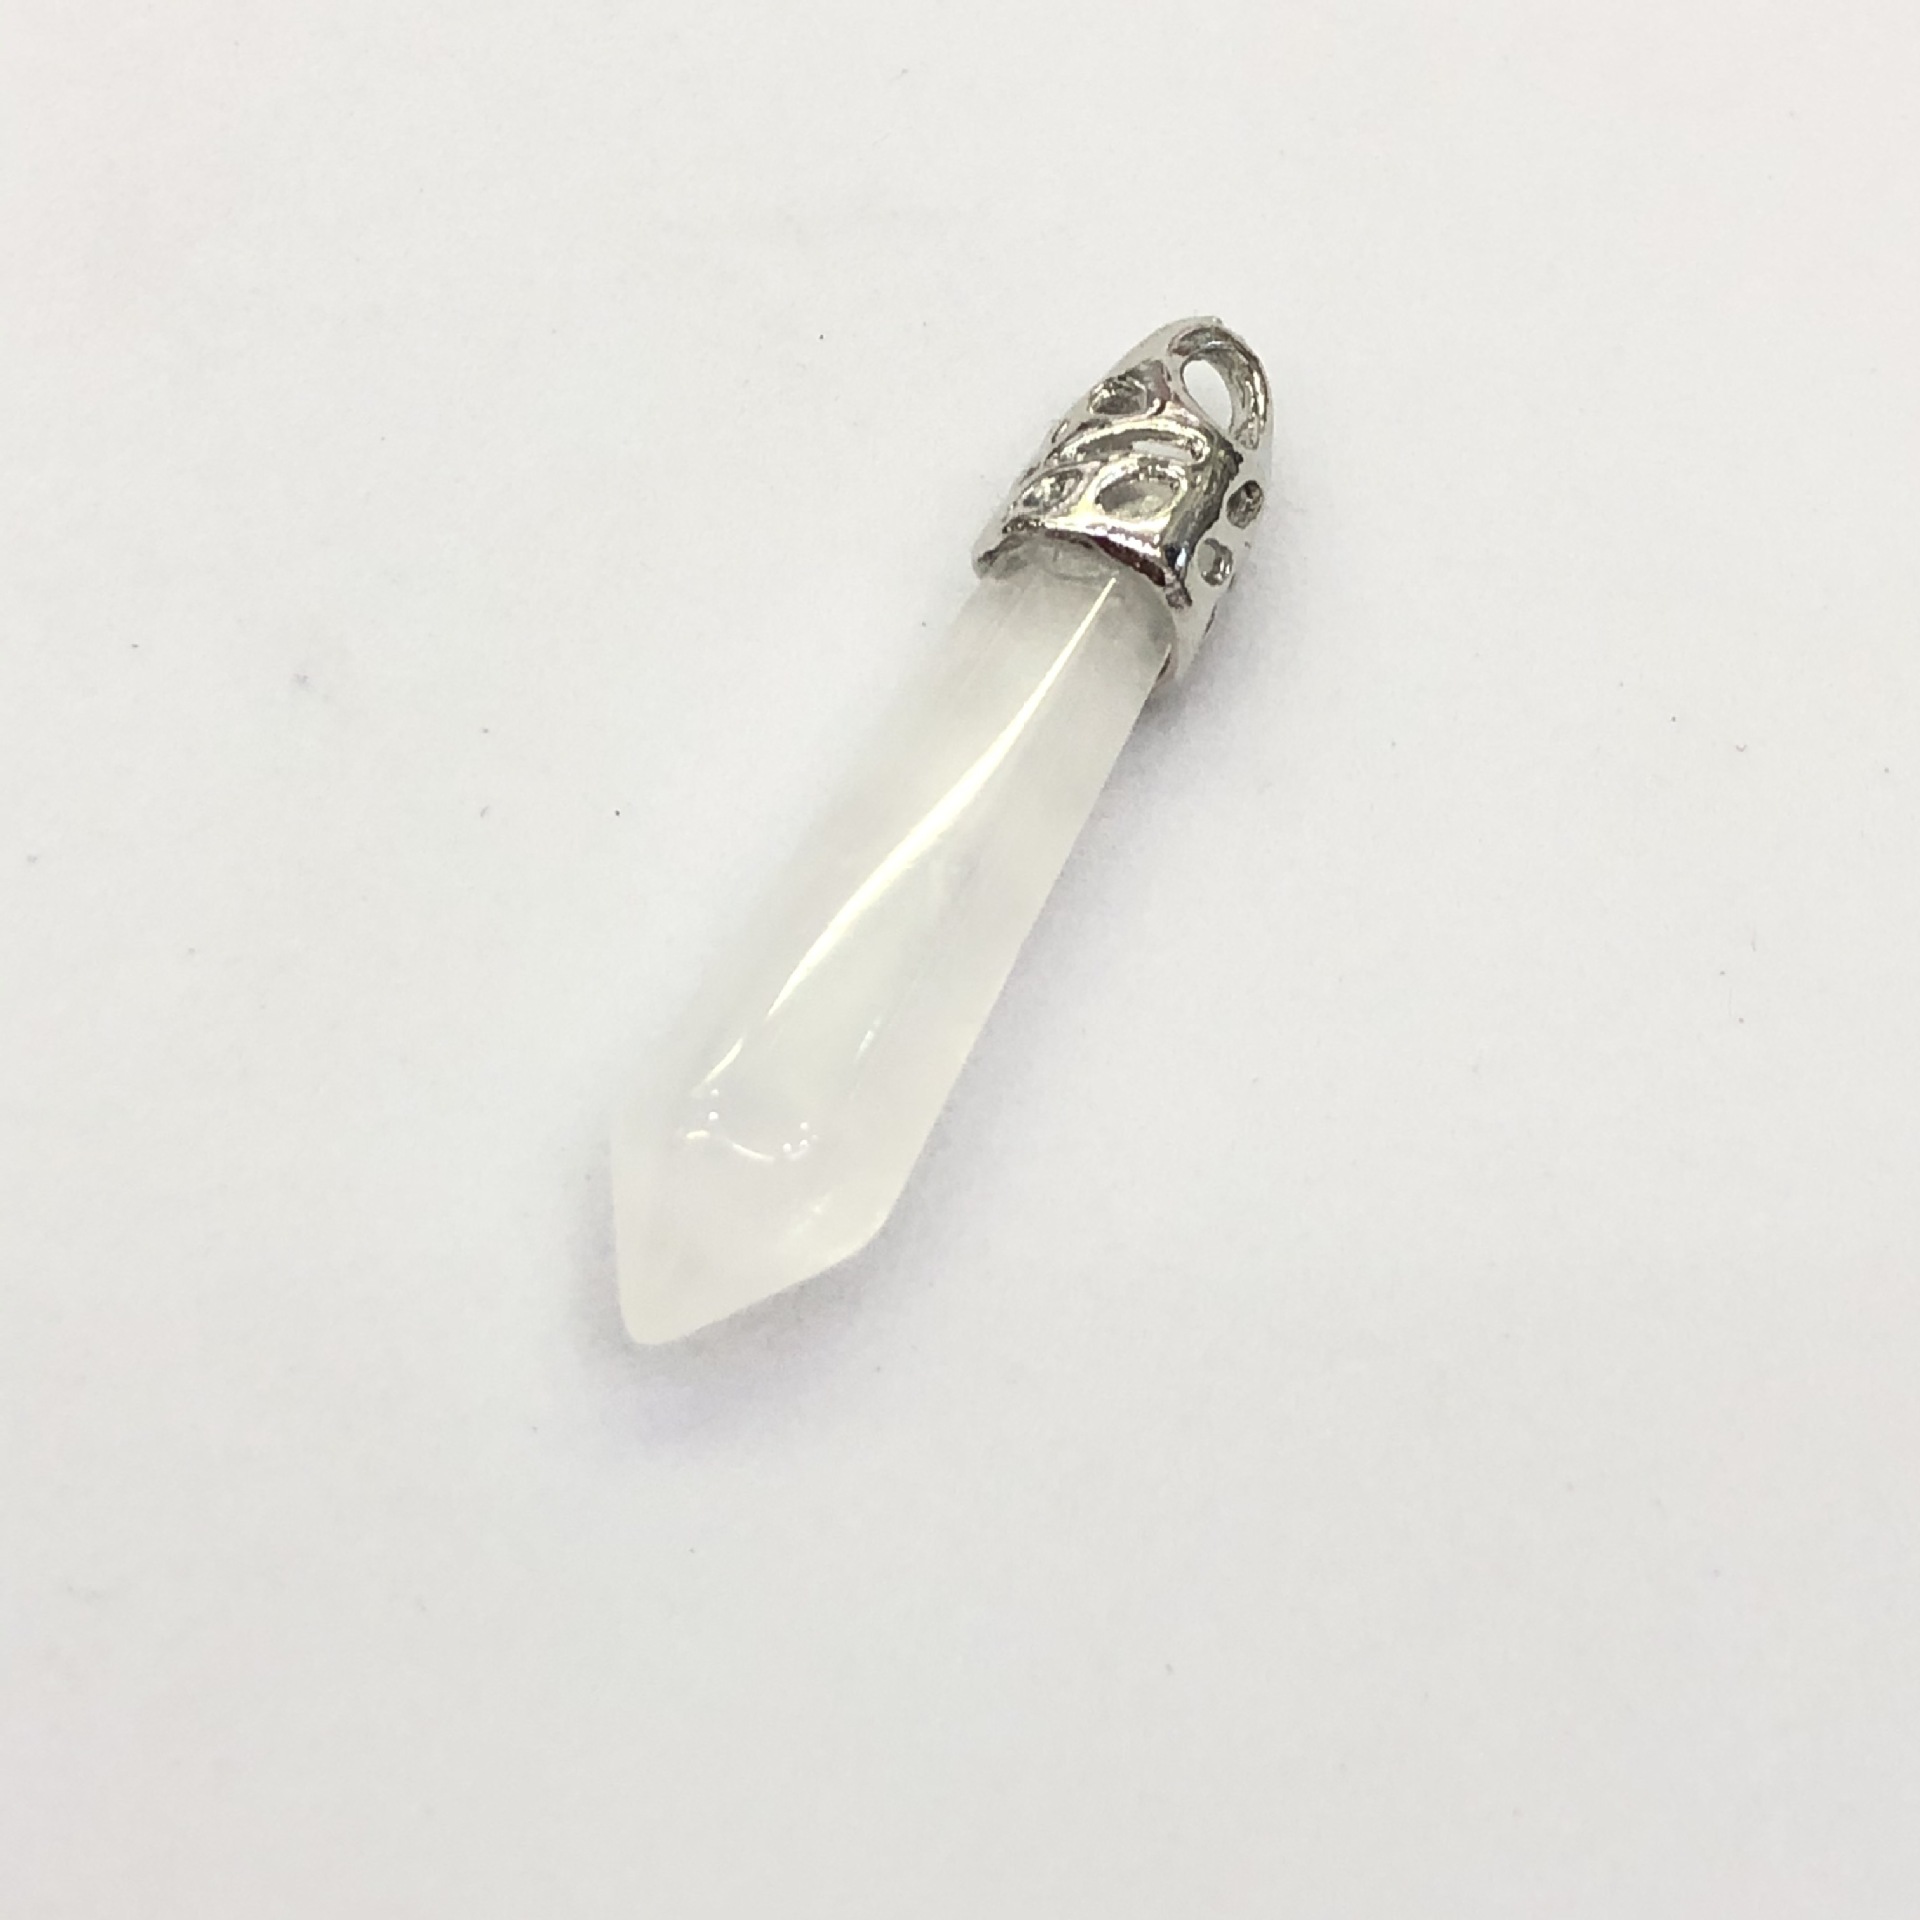 White crystal